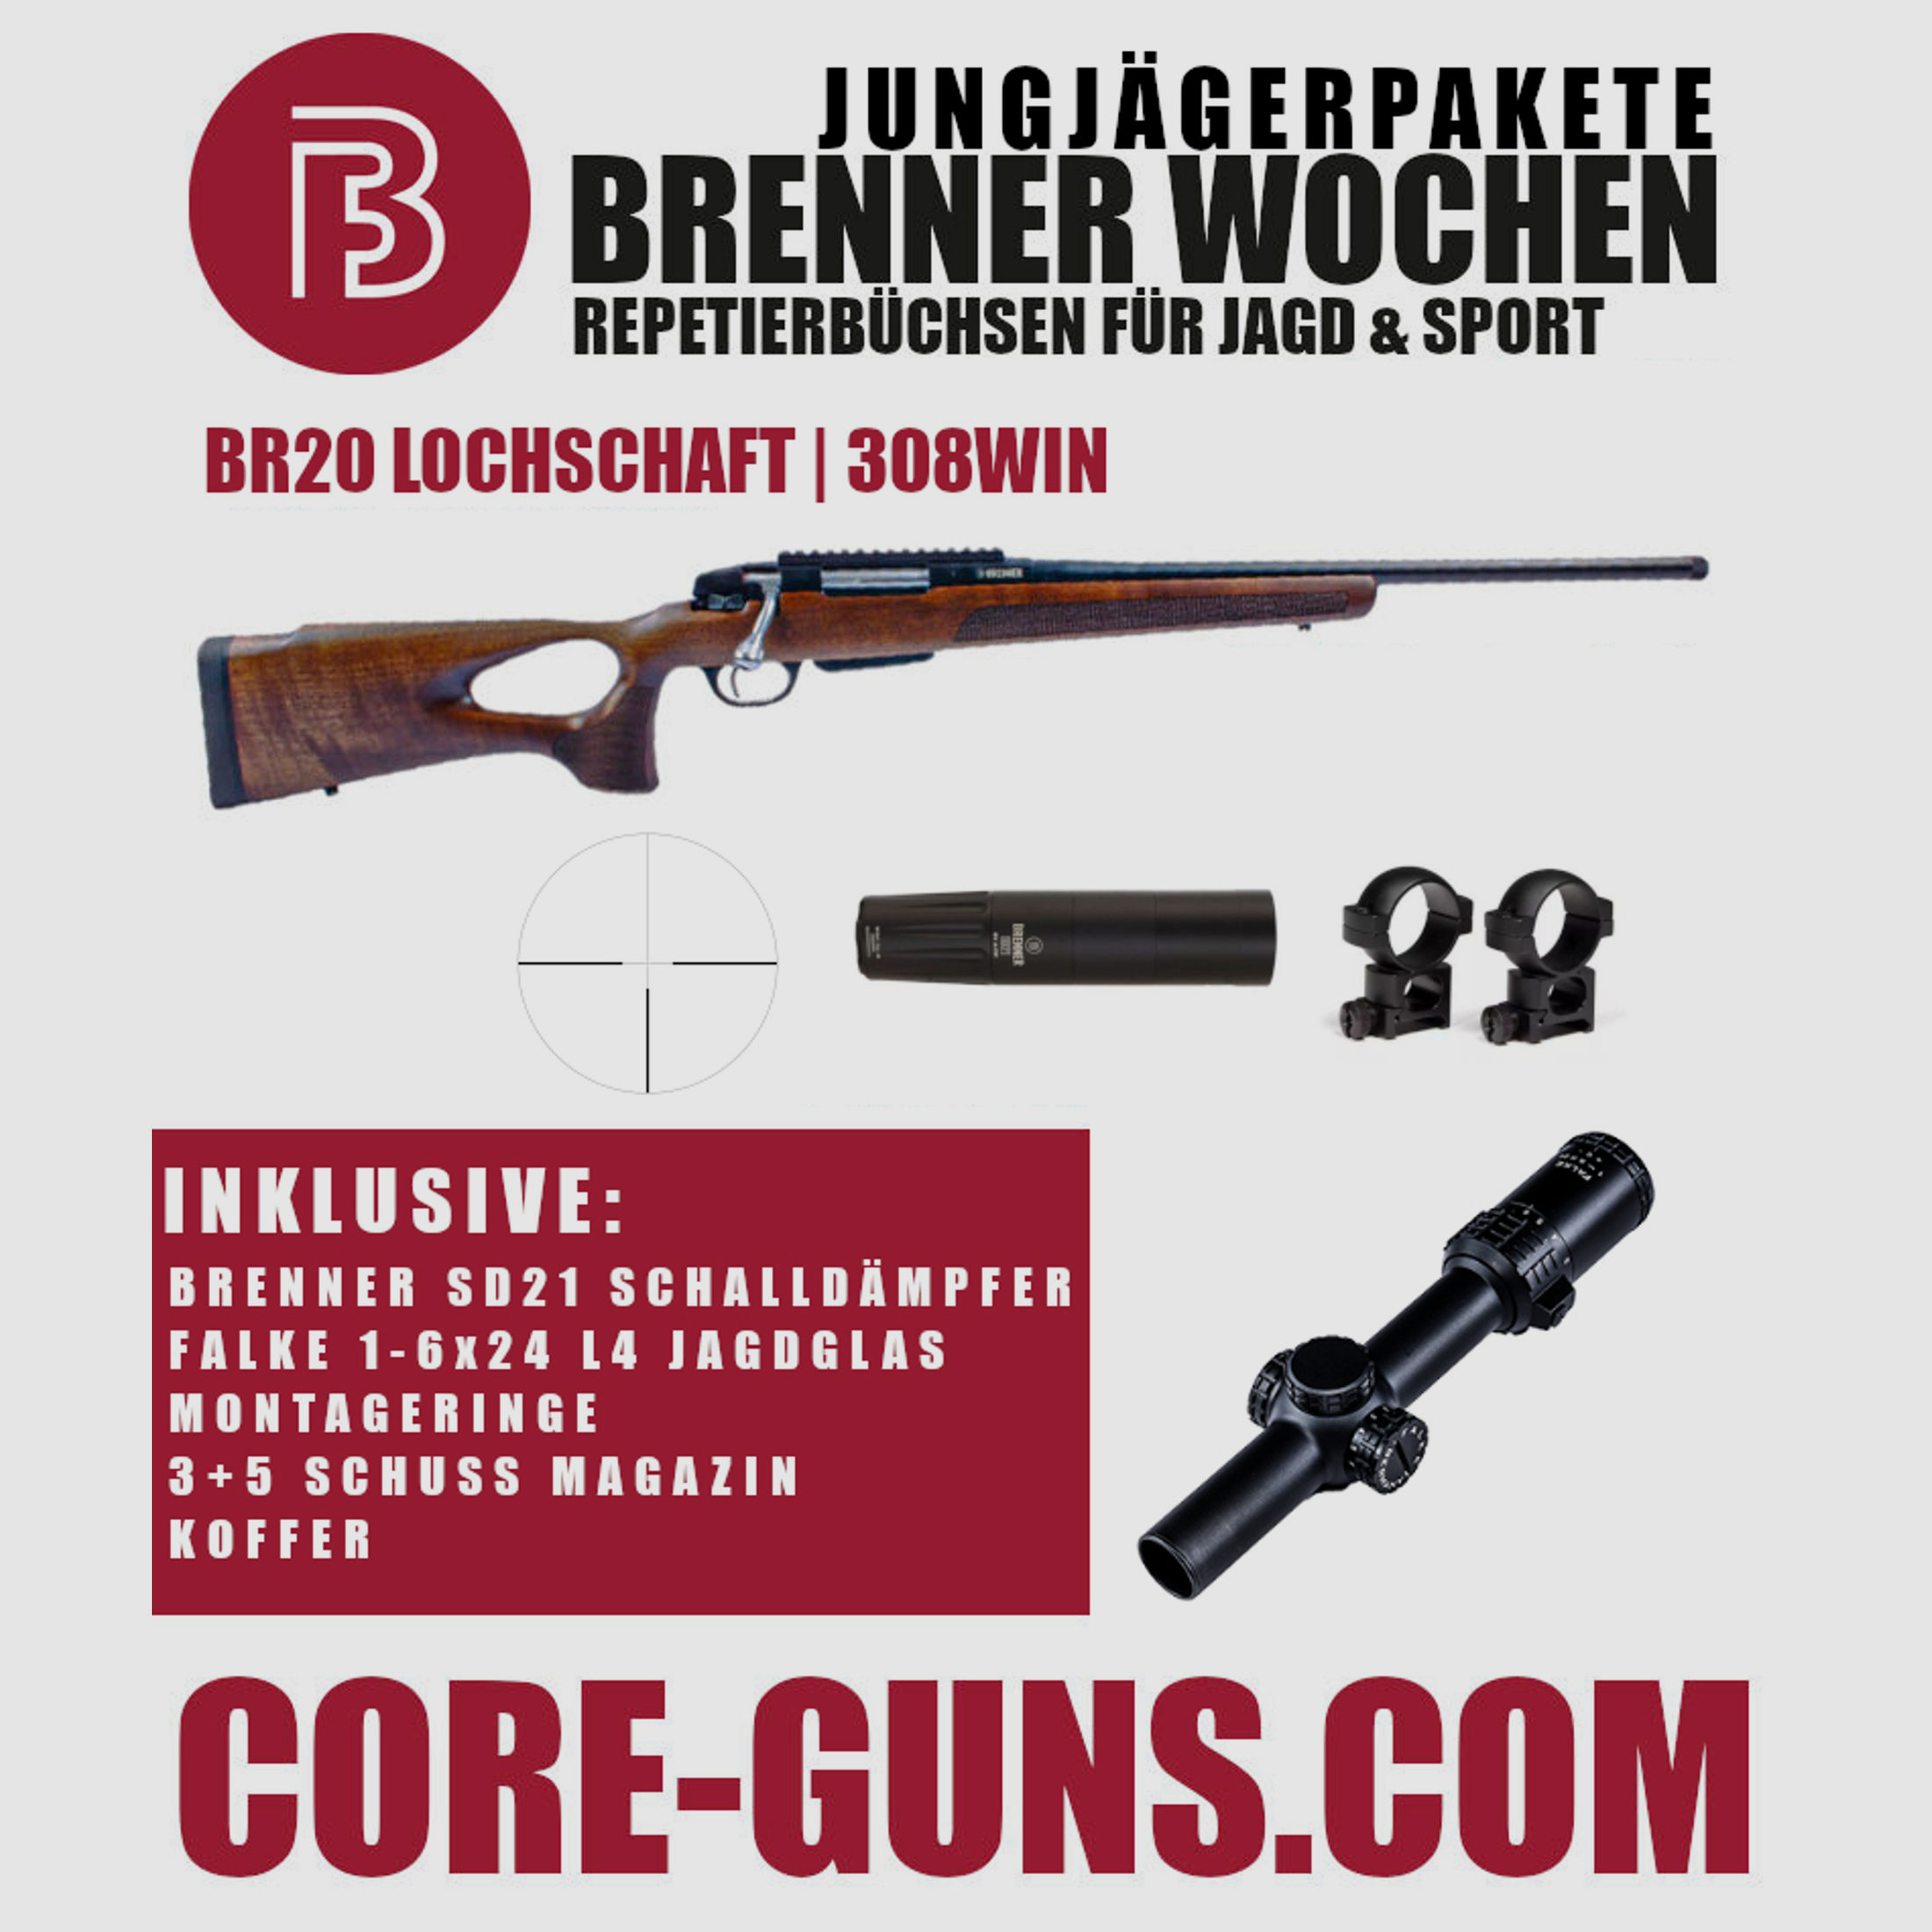 Brenner BR20 Lochschaft Jägerpaket UVP: 1647€  inkl. Brenner SD21 + Falke 1-6x24 L4 + Montageringe + Koffer inkl. 3+5 Schuss Magazin